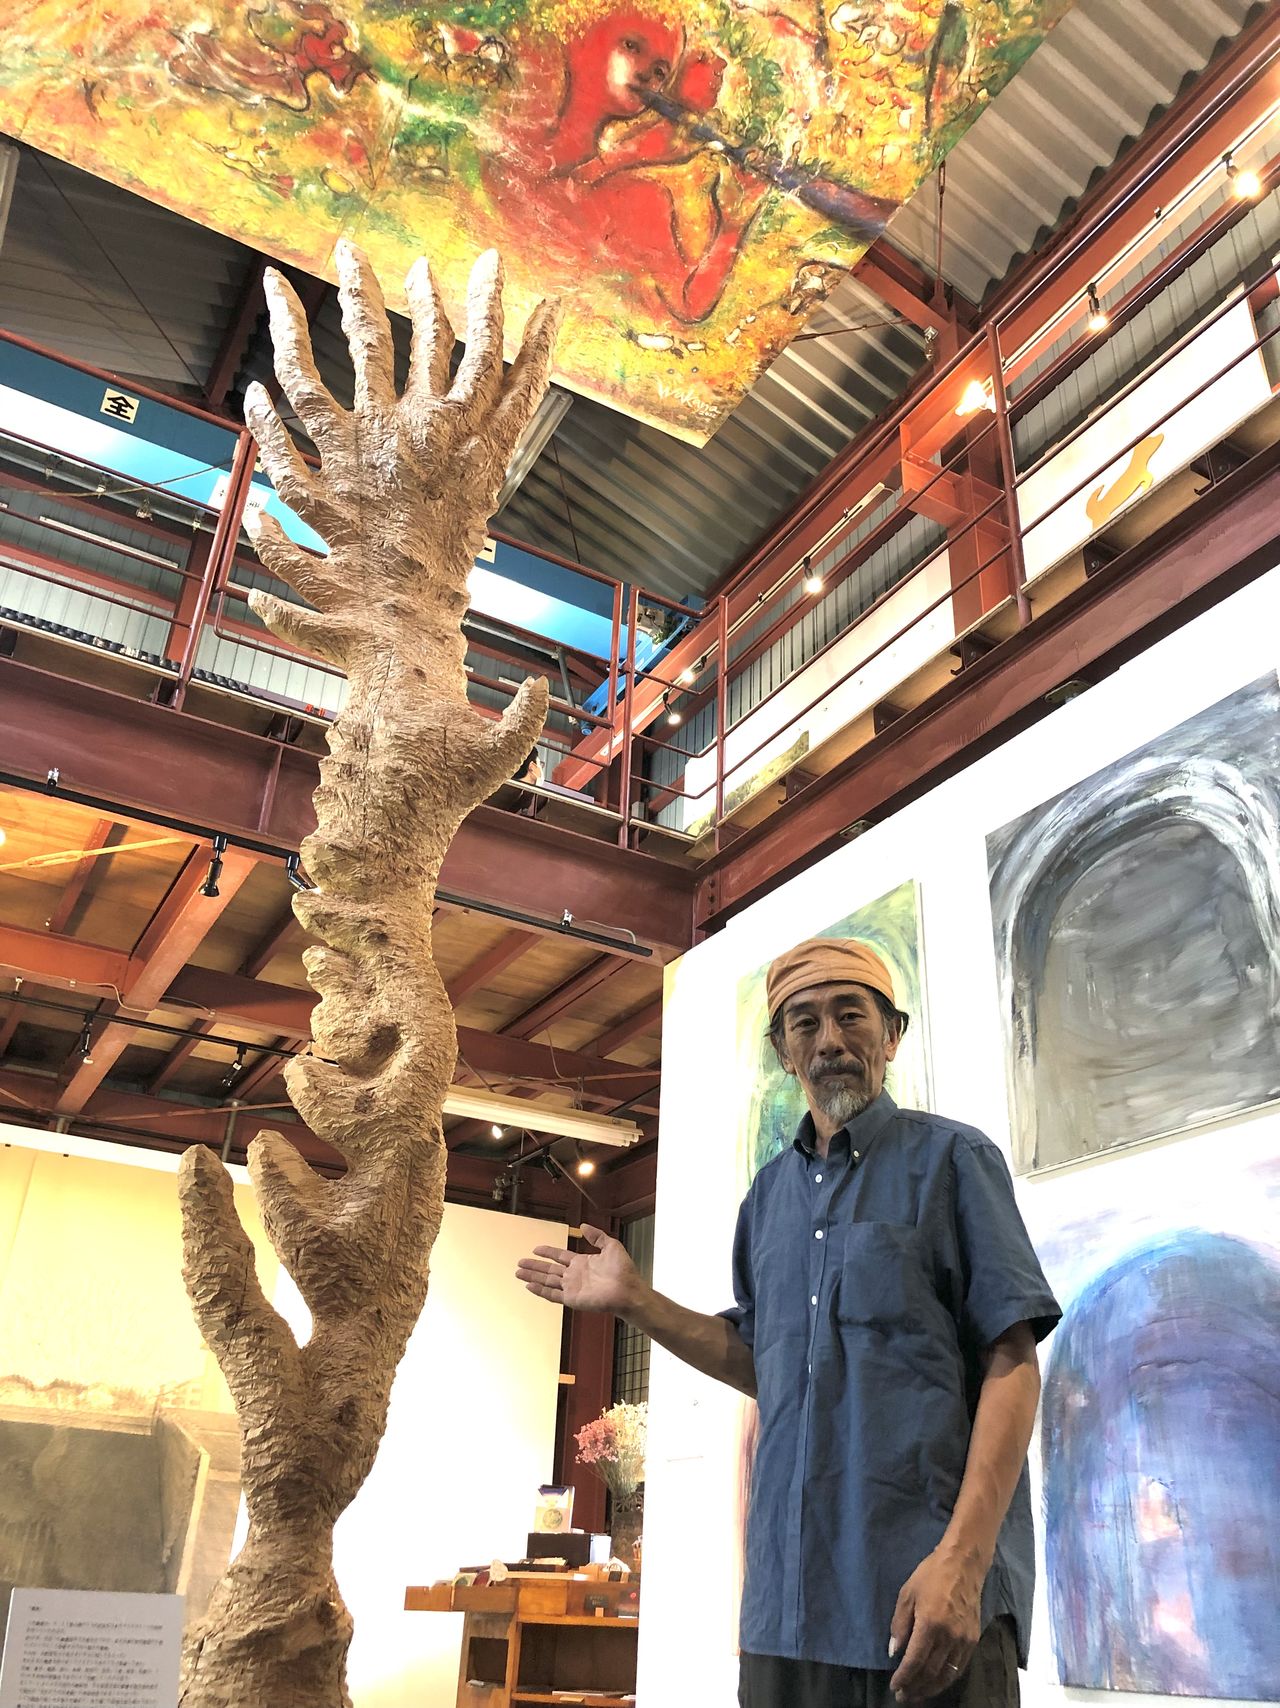 ناكاسوجي جون هو مدير متحف ”متحفنا“، الذي يديره هو والفنانون المشاركون. (© ناكاسوجي جون)